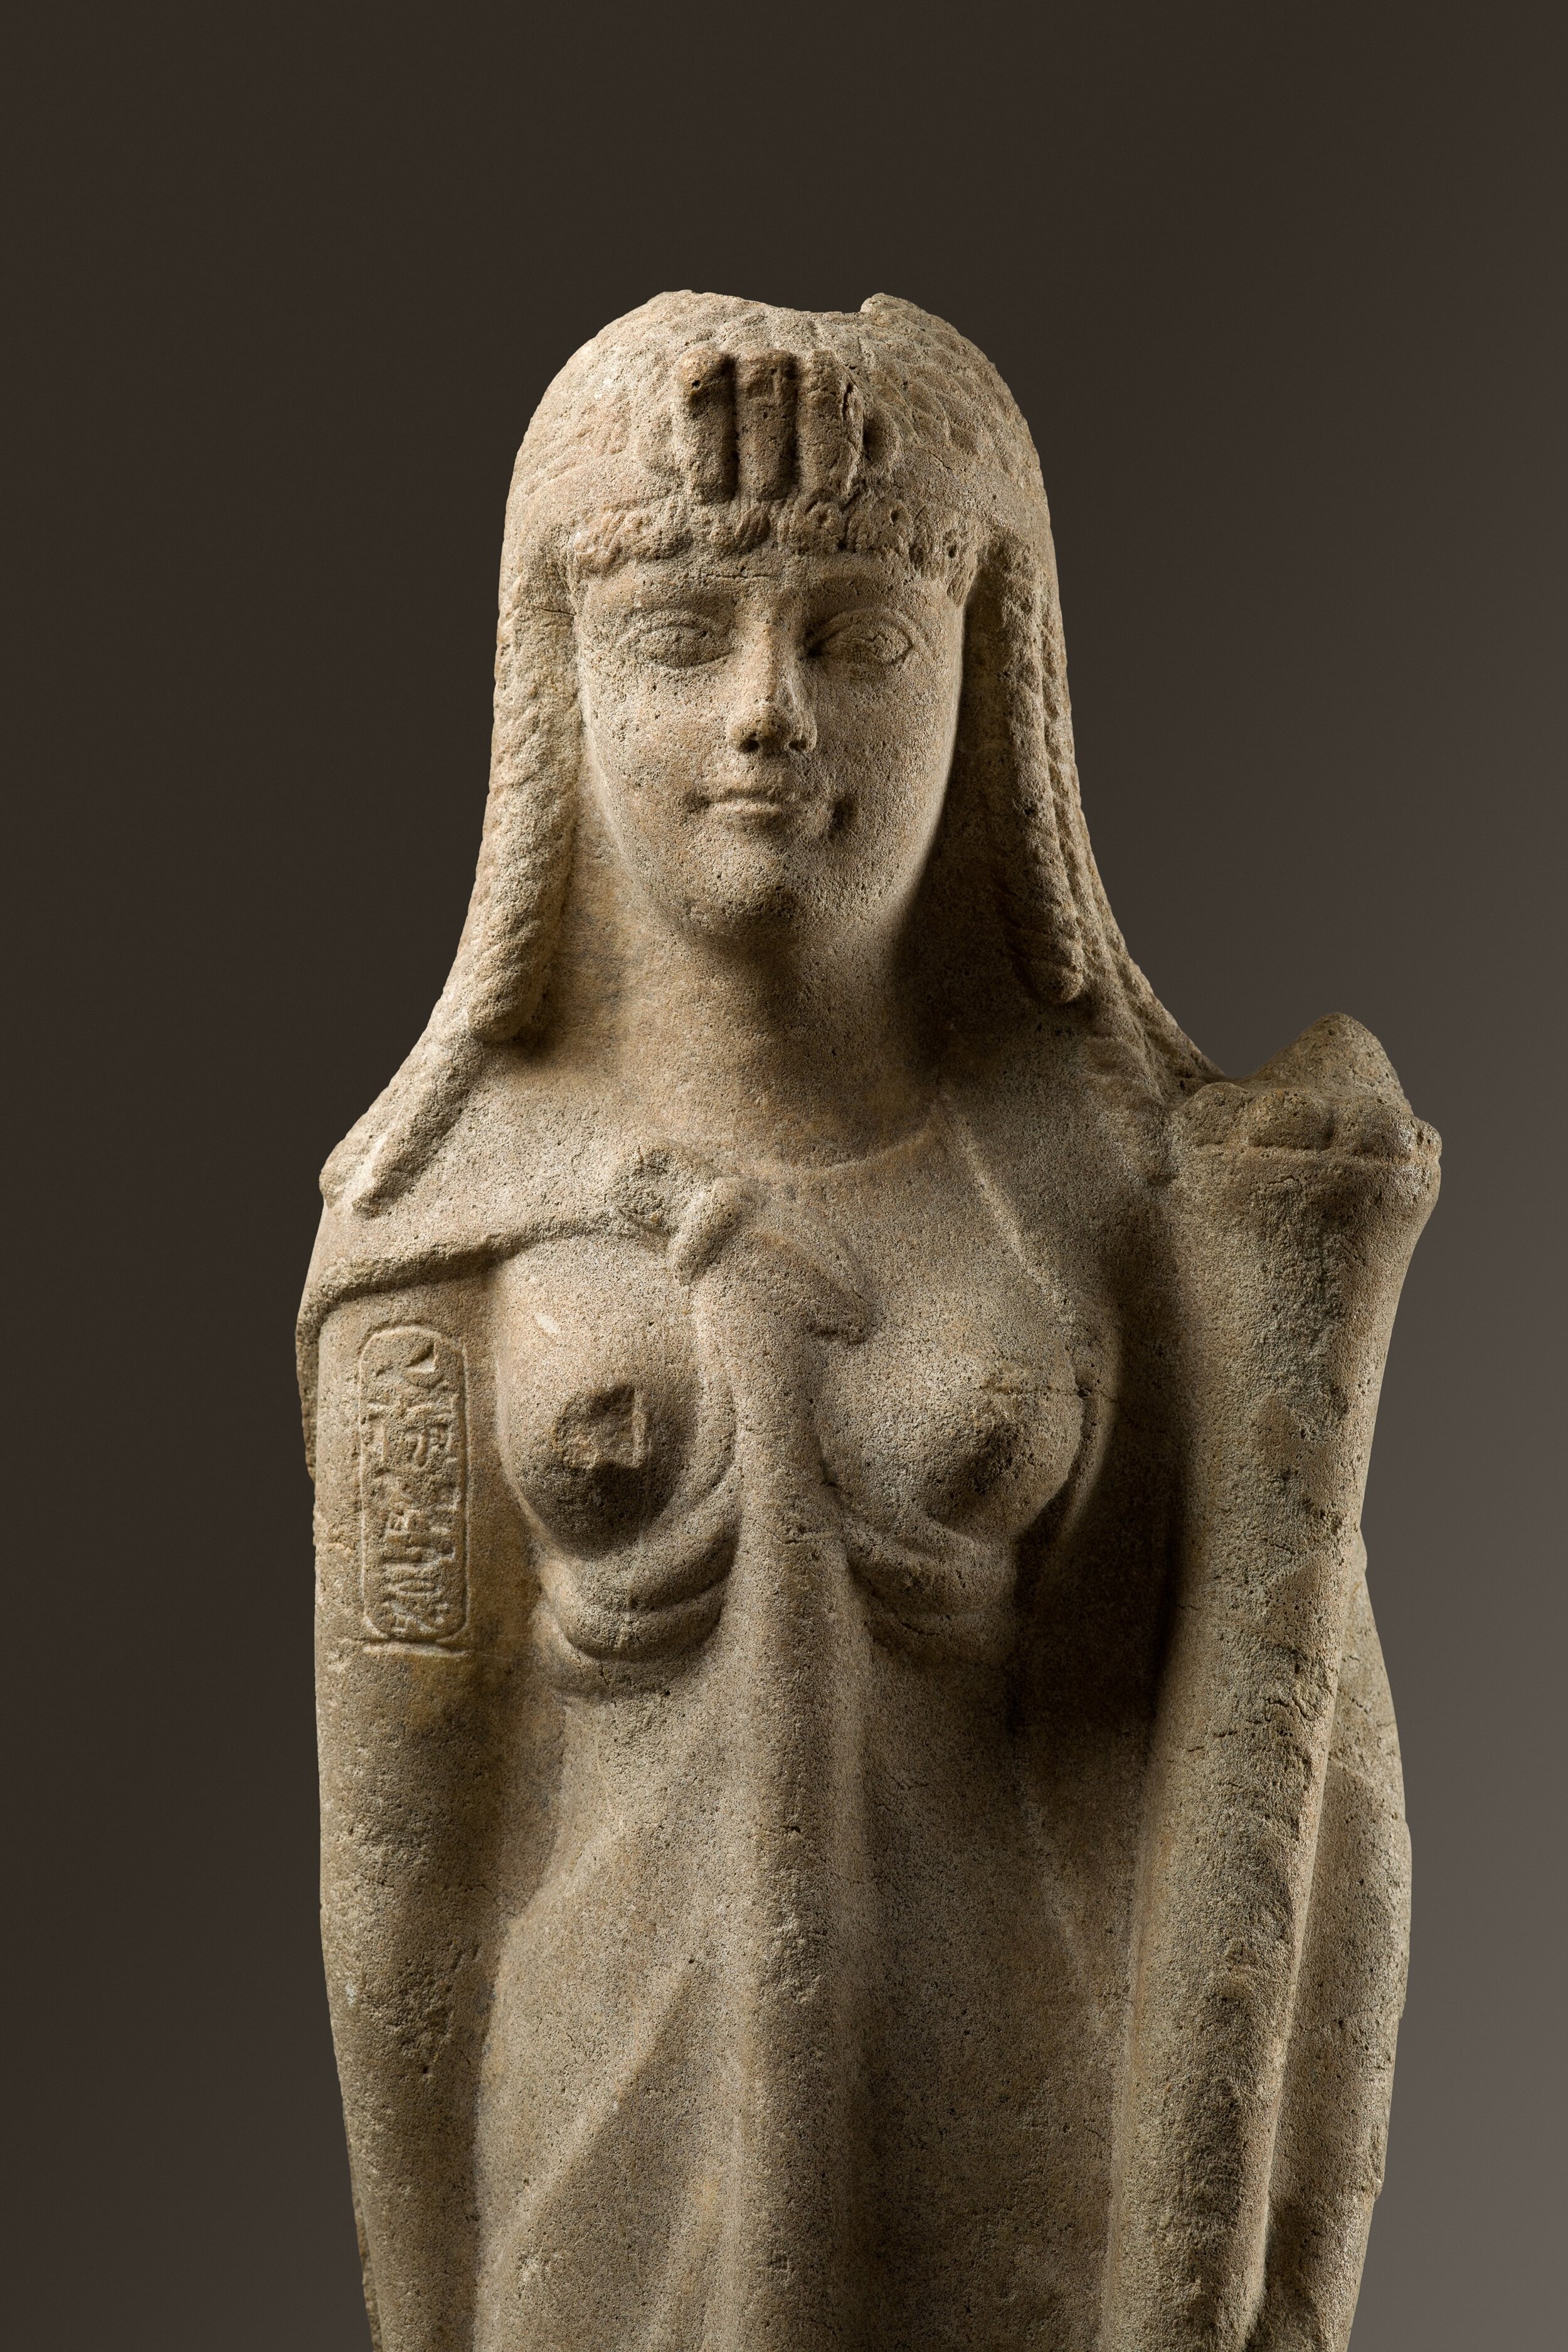 A Ptolemaic queen, perhaps Cleopatra VII